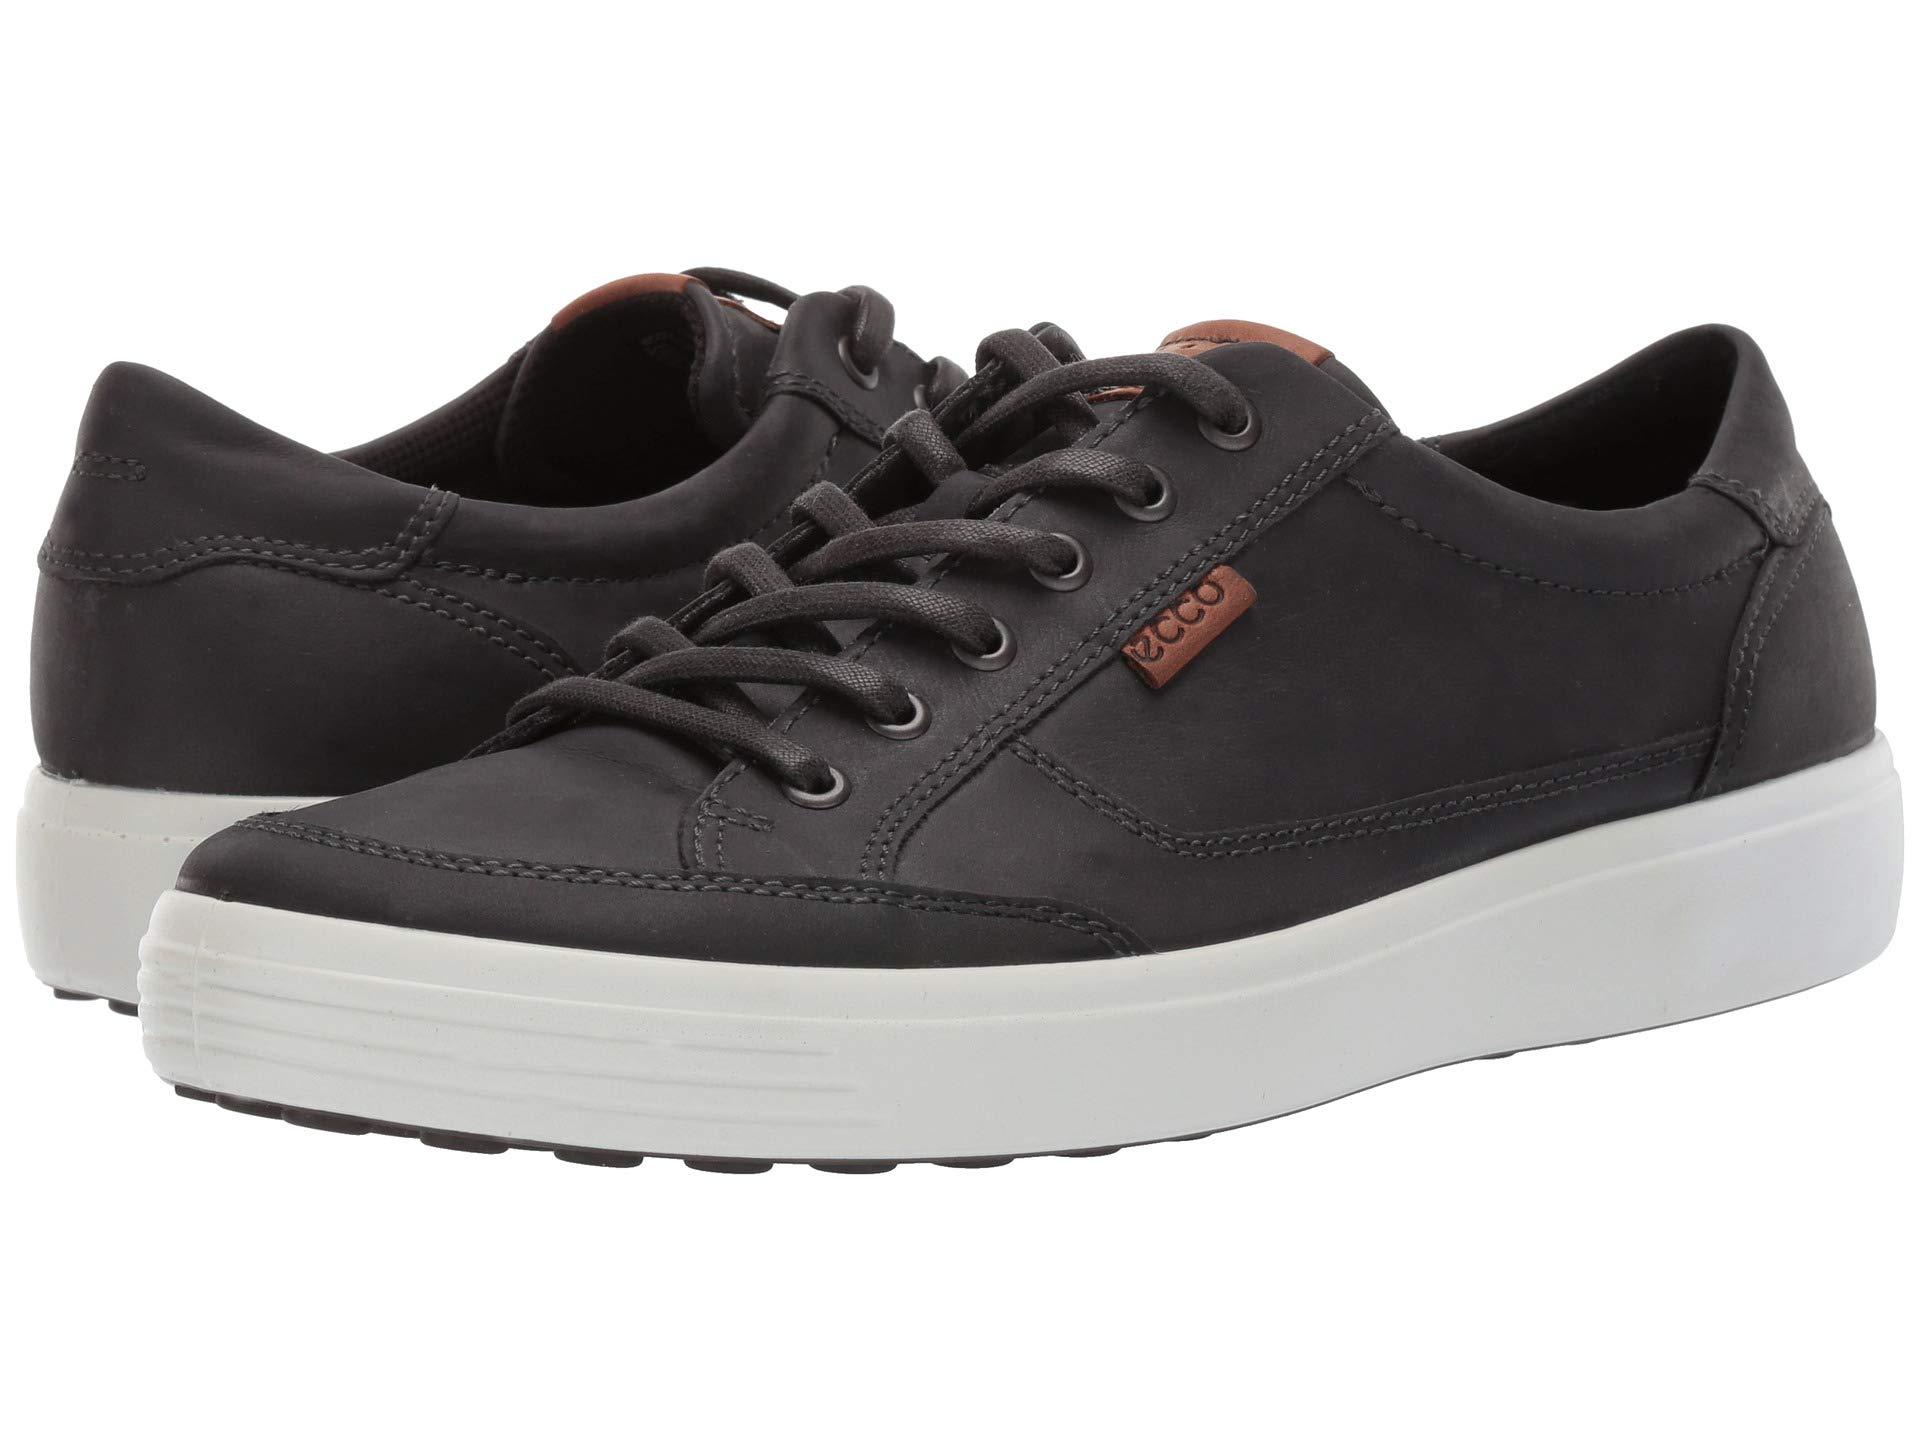 Ecco Leather Soft Retro Sneaker in Black for Men - Lyst